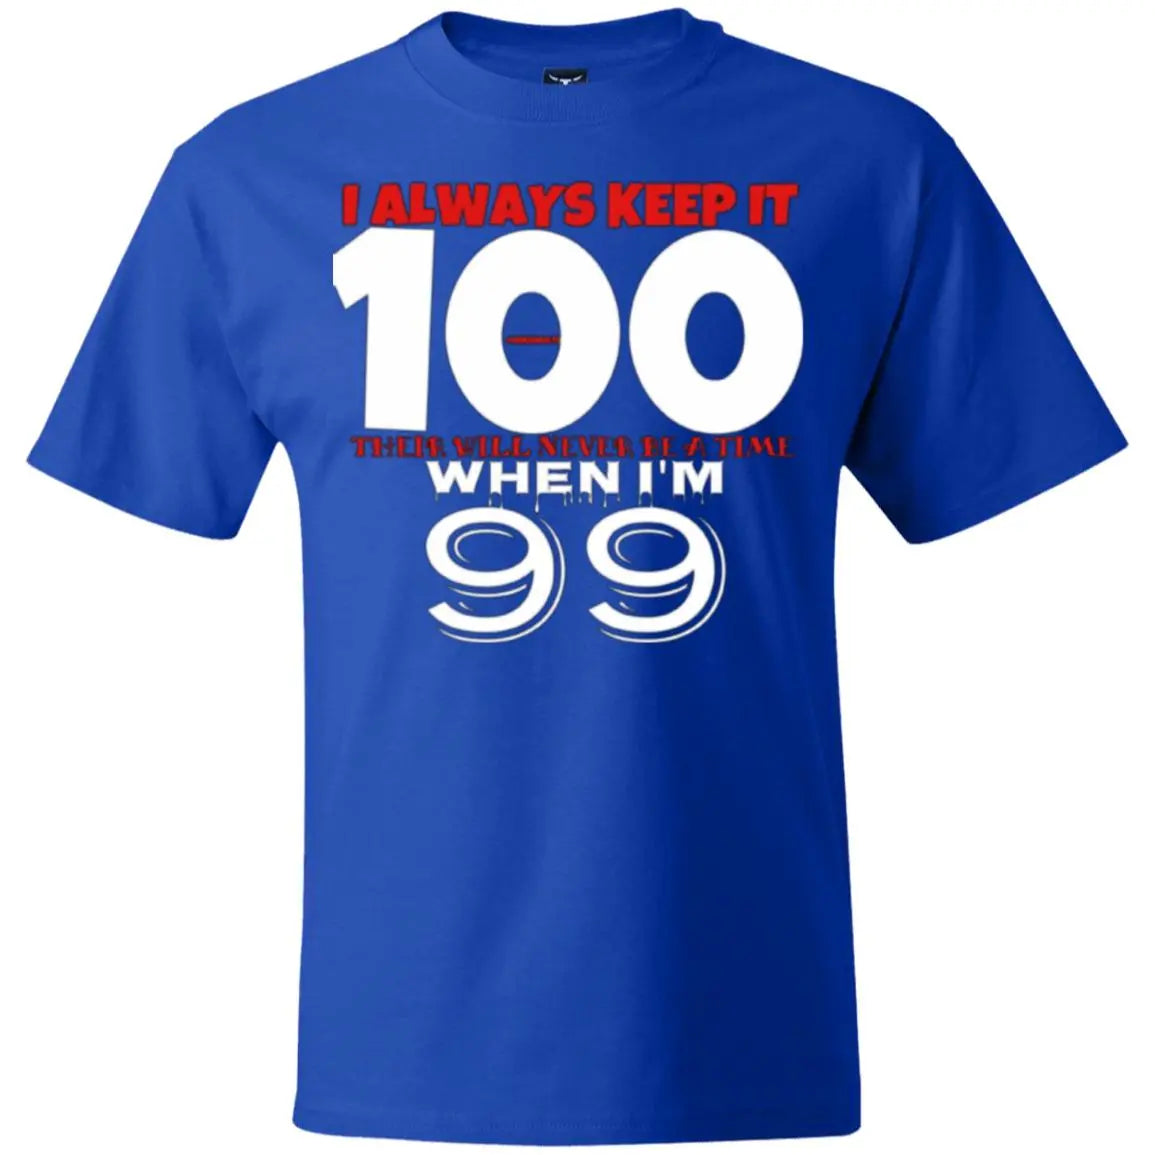 I Always Keep It 100 - Men's Beefy T-Shirt CustomCat